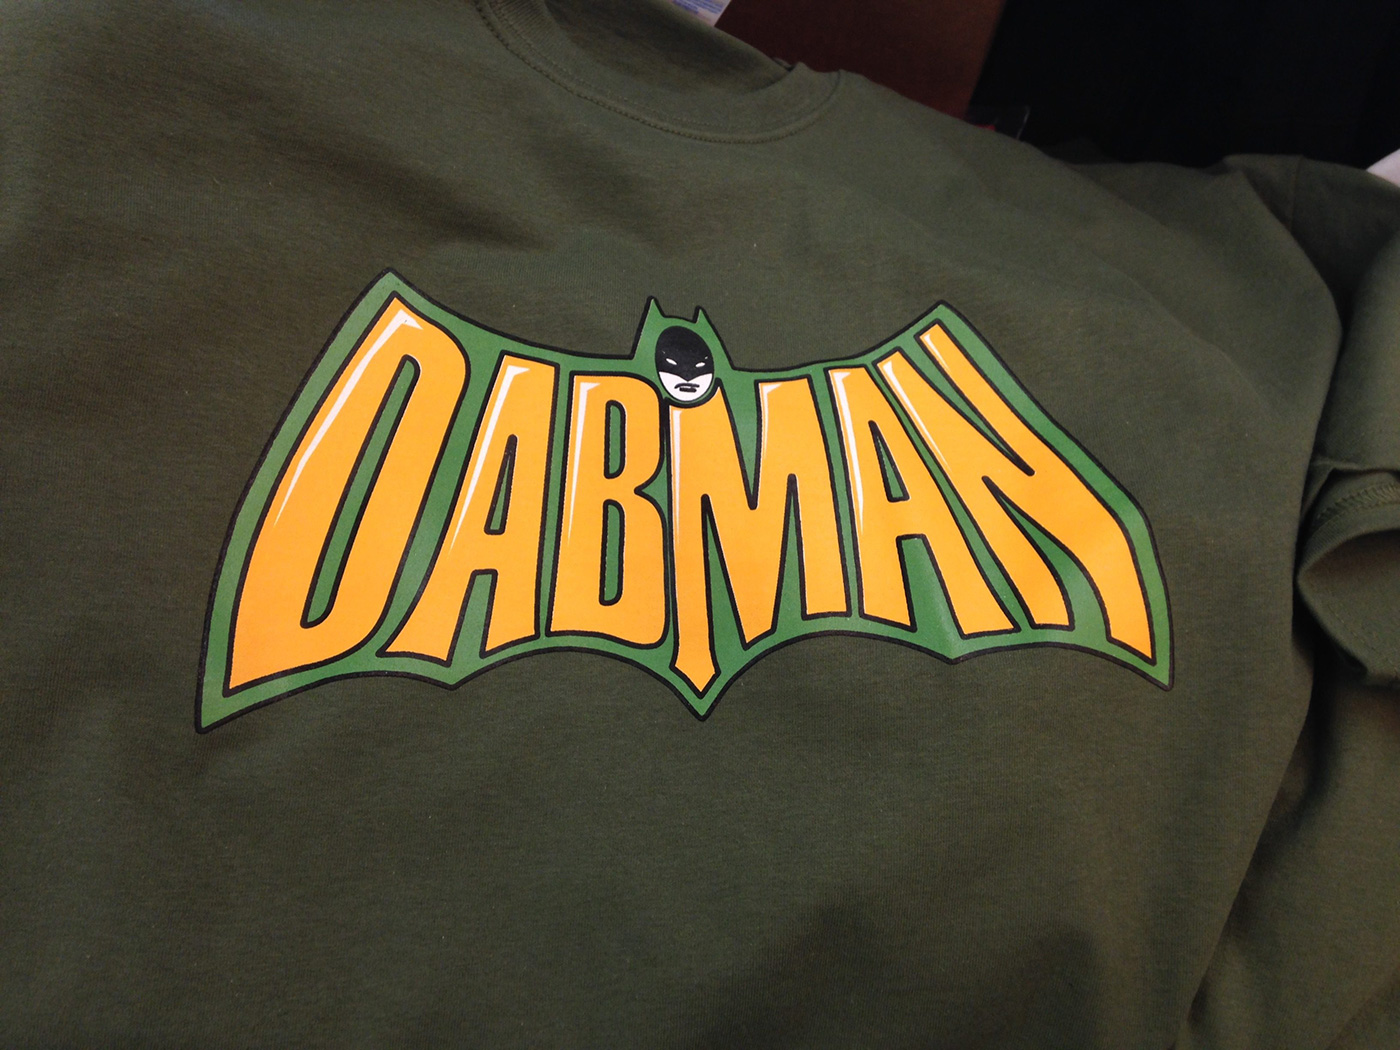 Dabman shirts